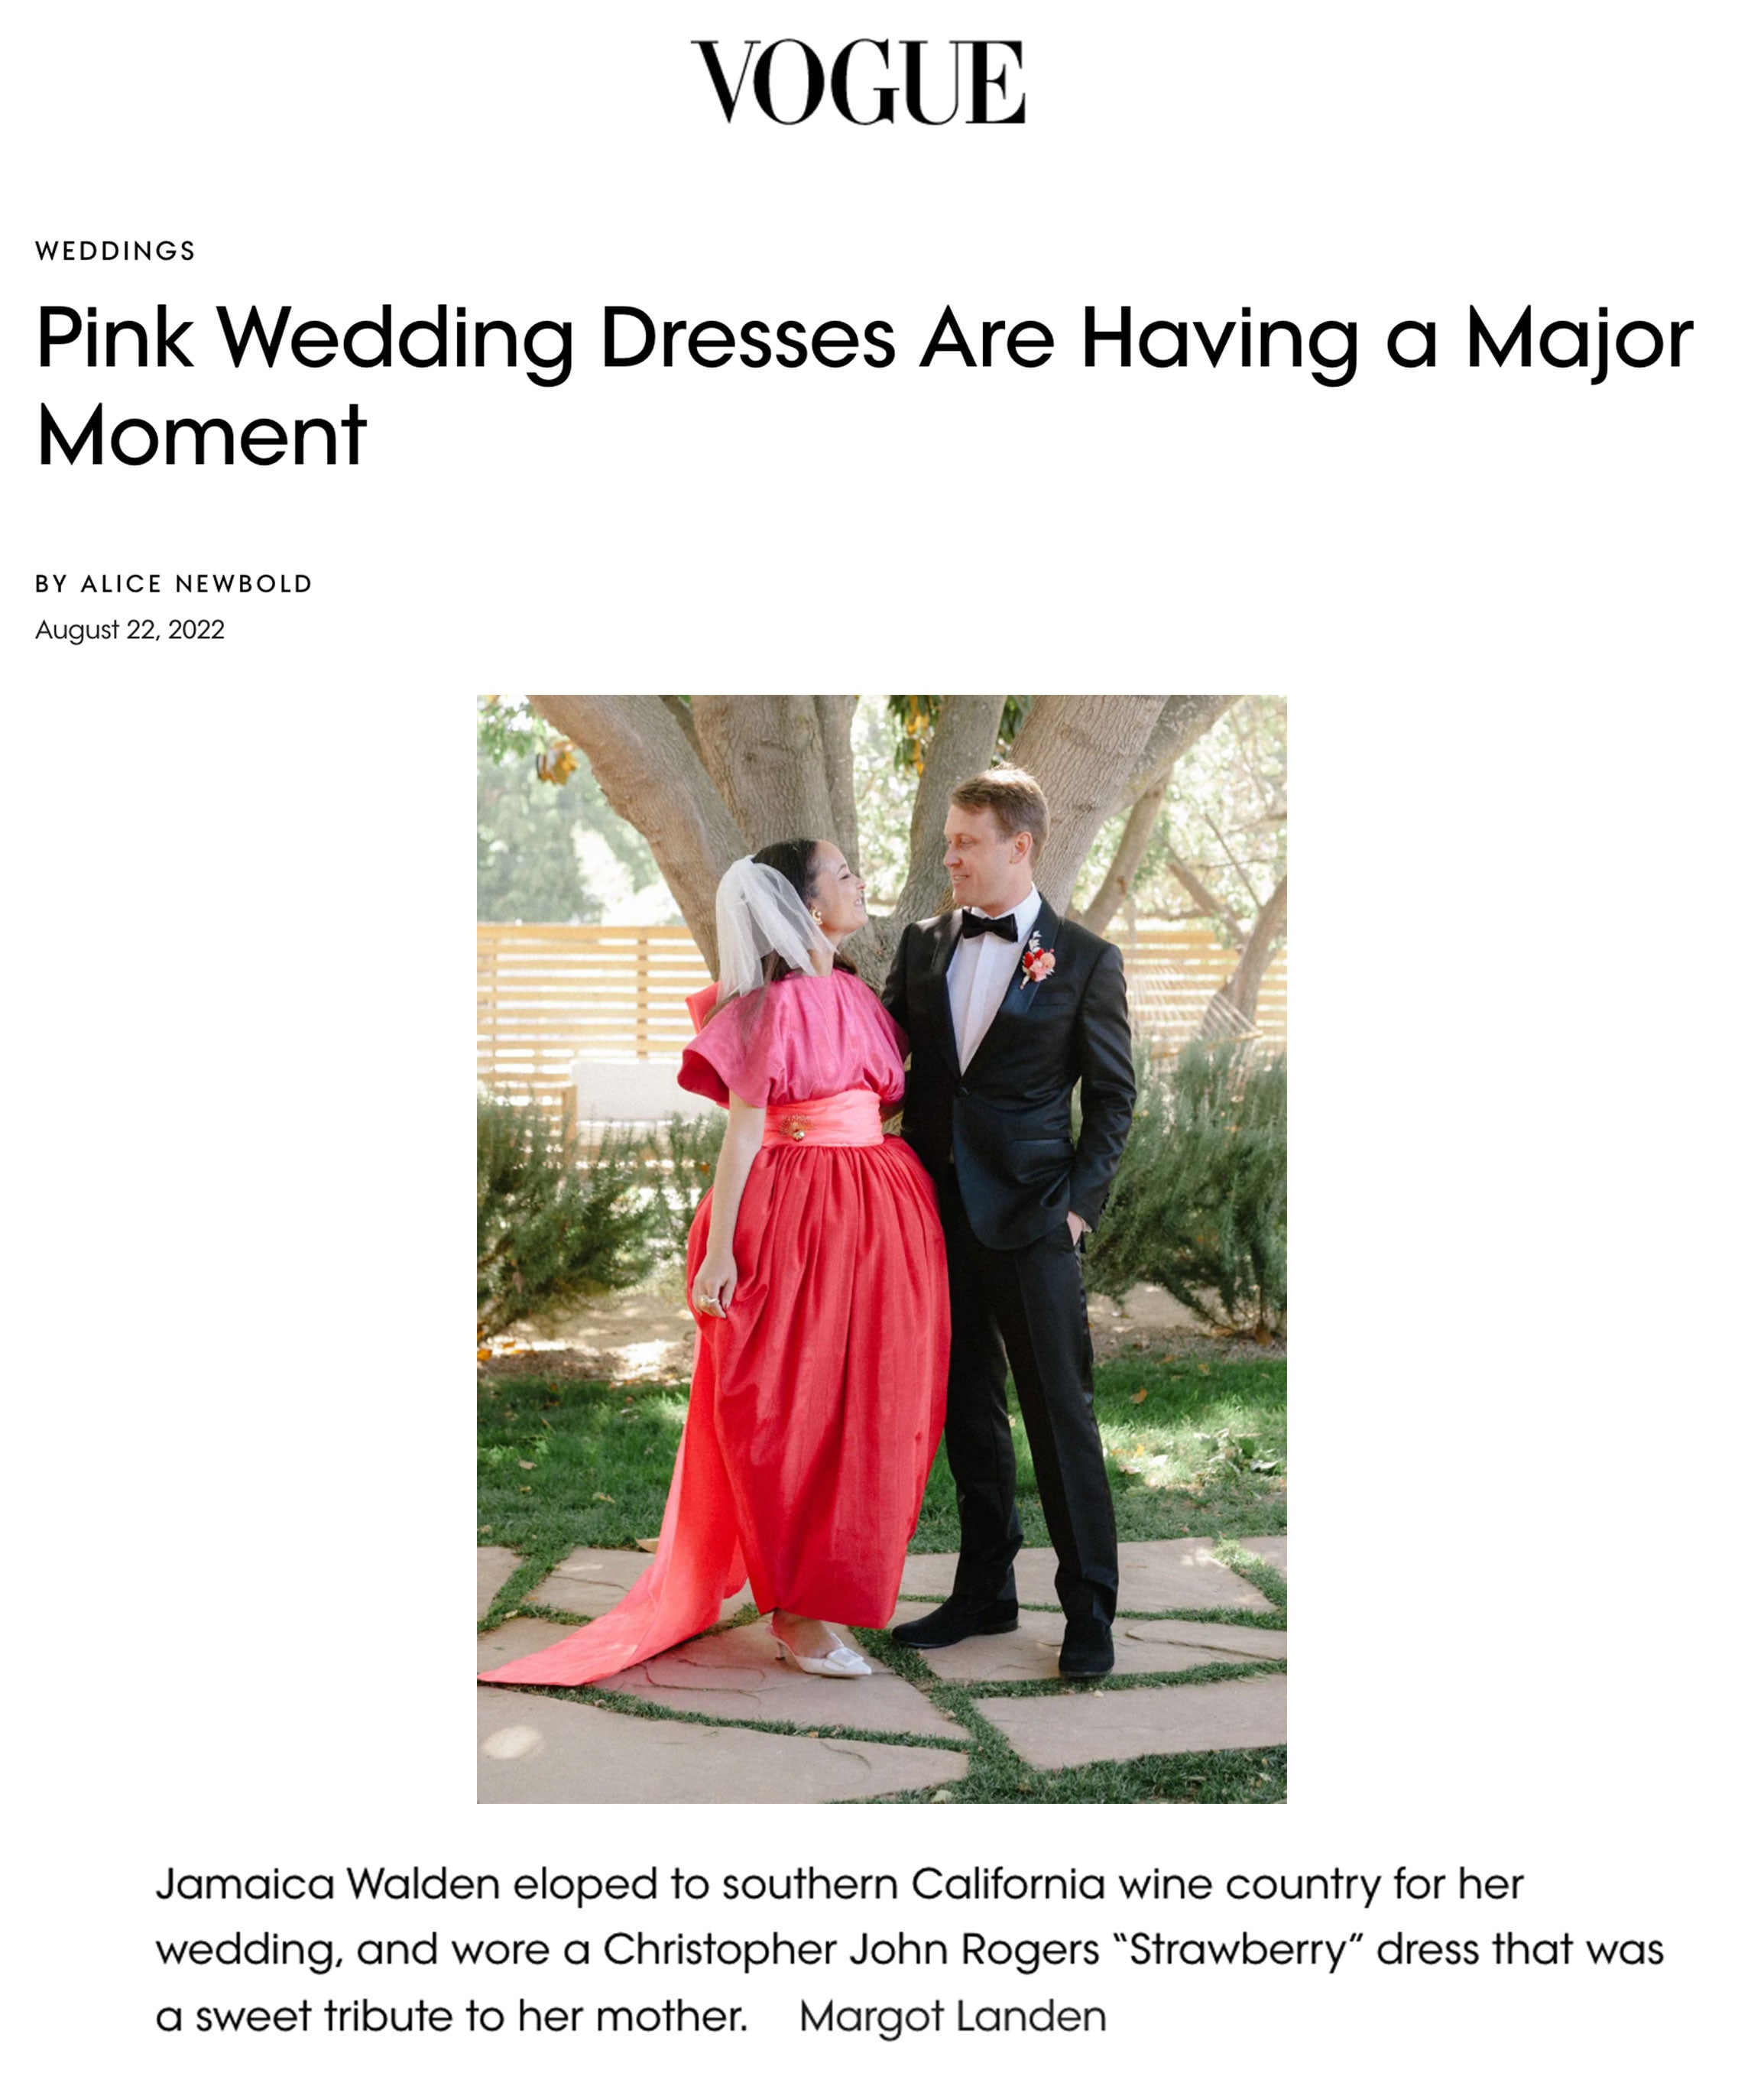 VOGUE: Pink Wedding Dresses Are Having a Major Moment